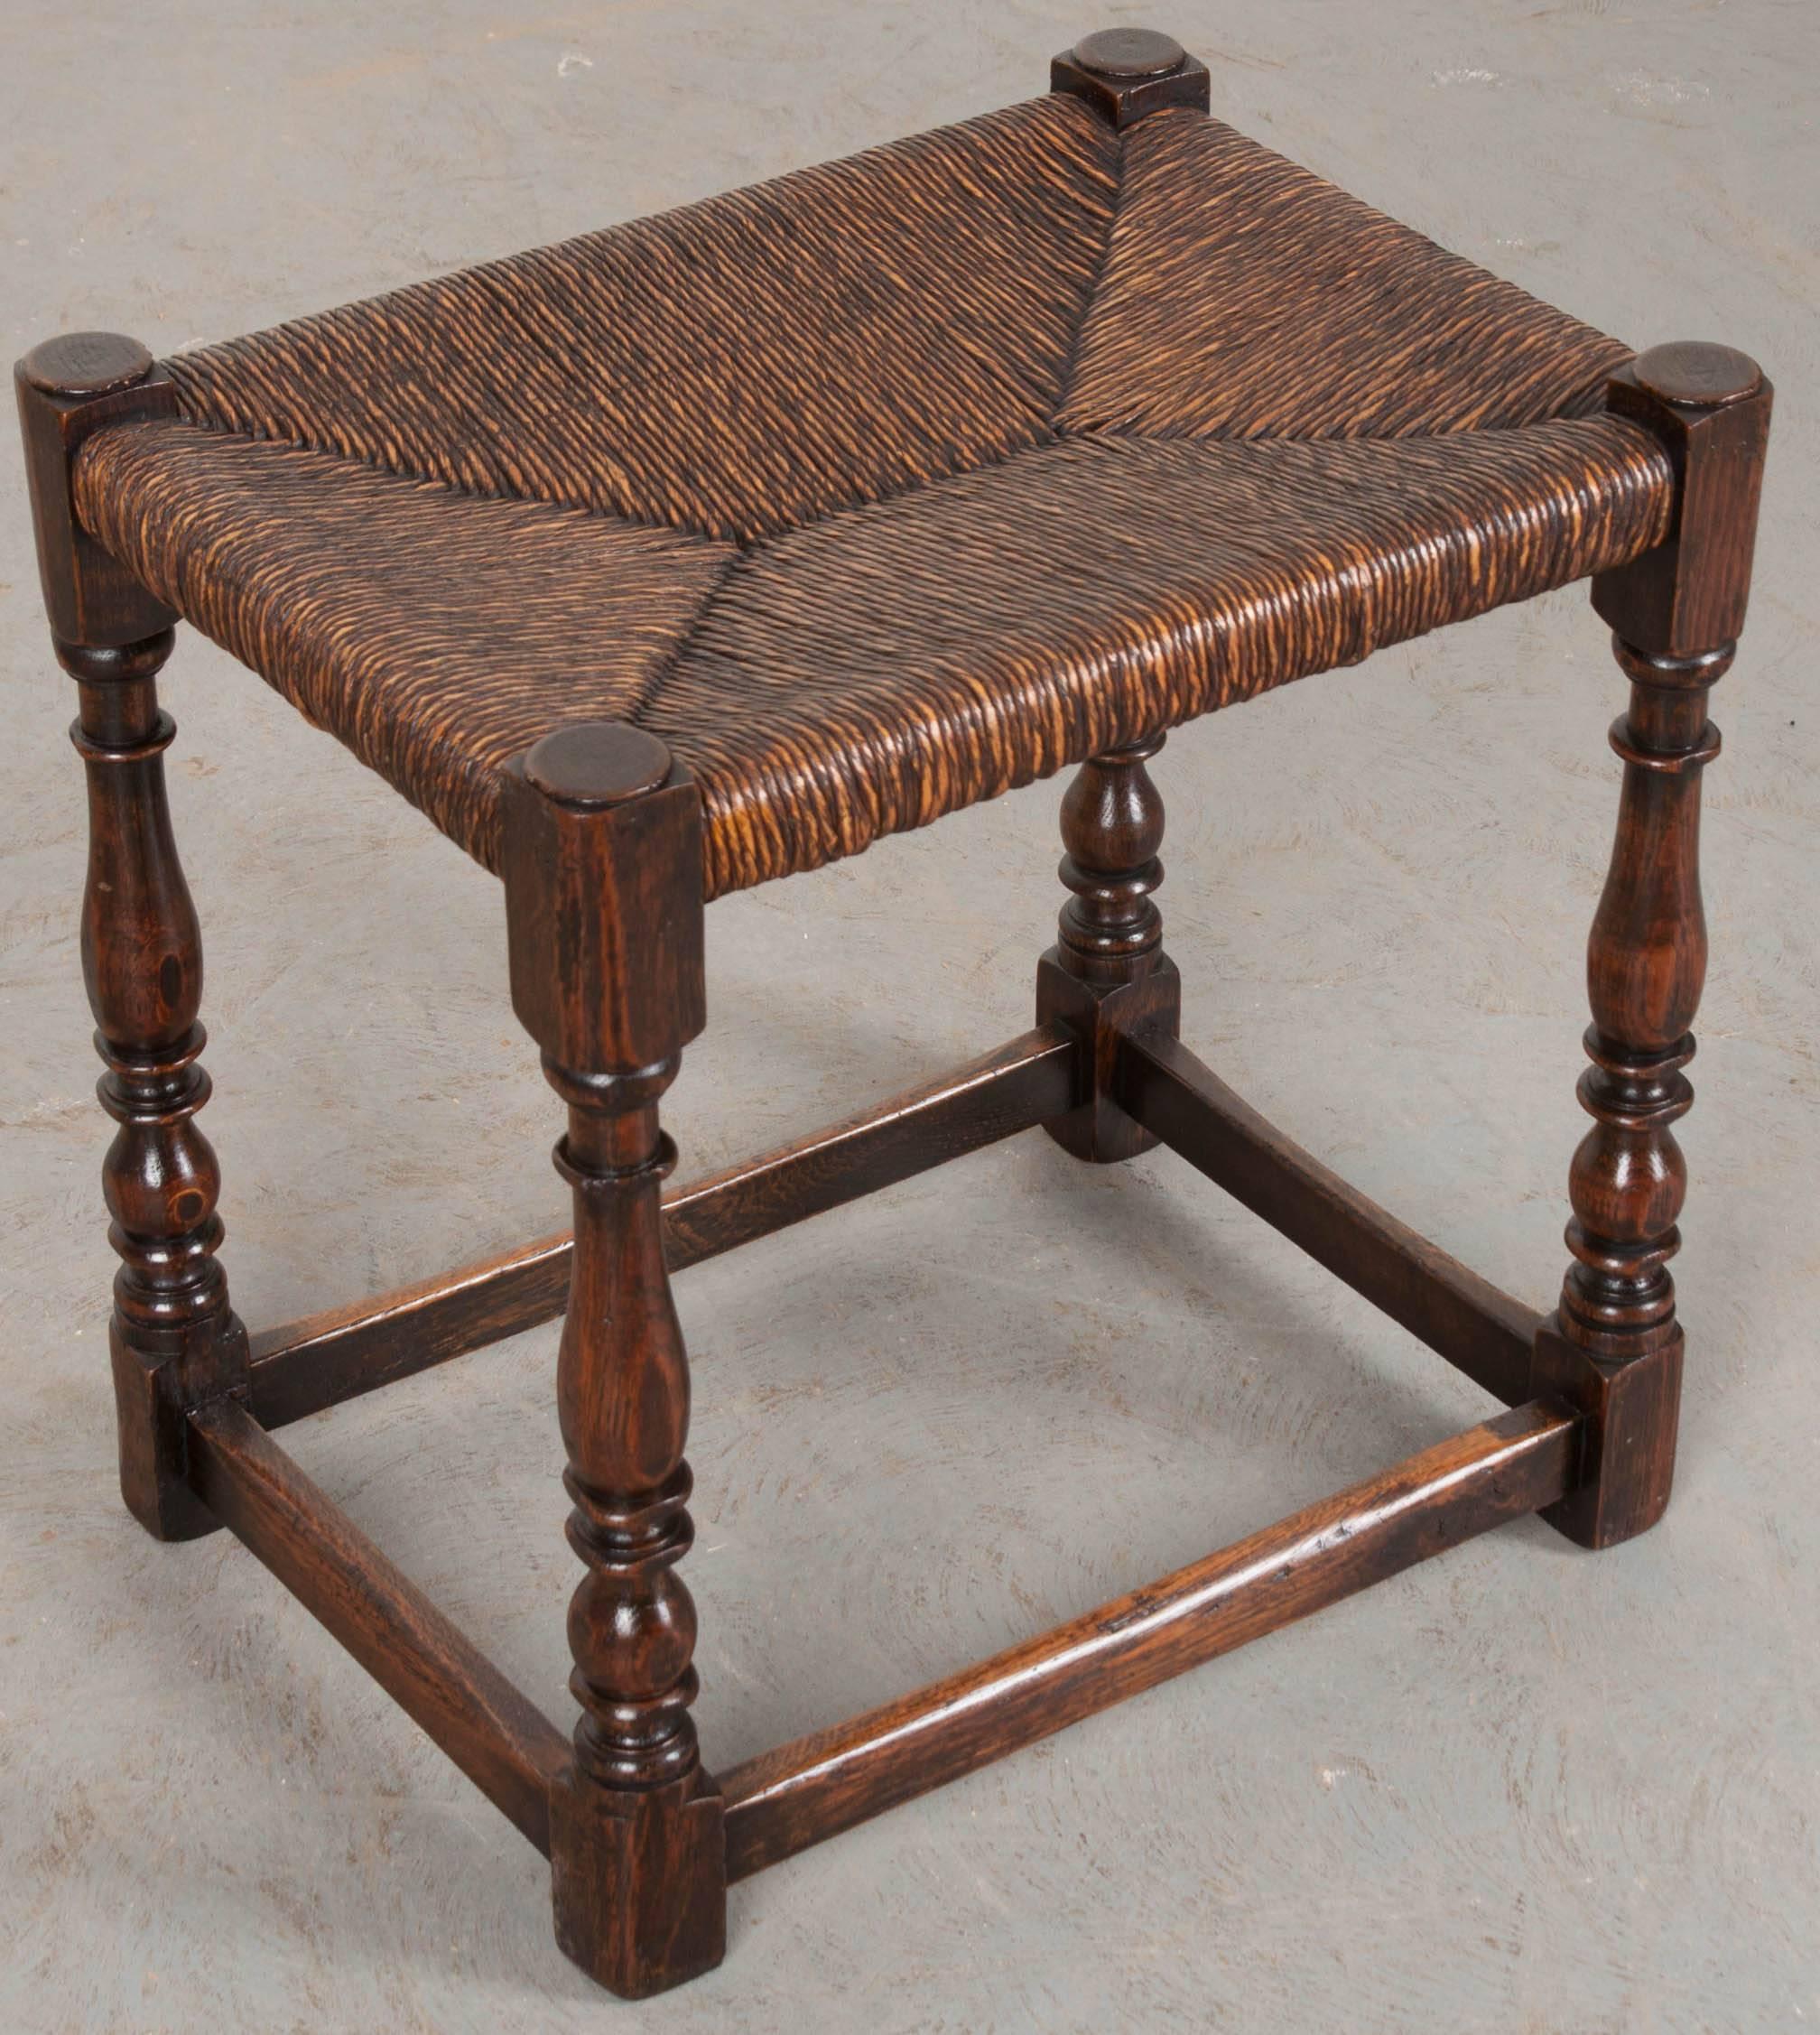 Hand-Carved English 19th Century Rush Seat Stool